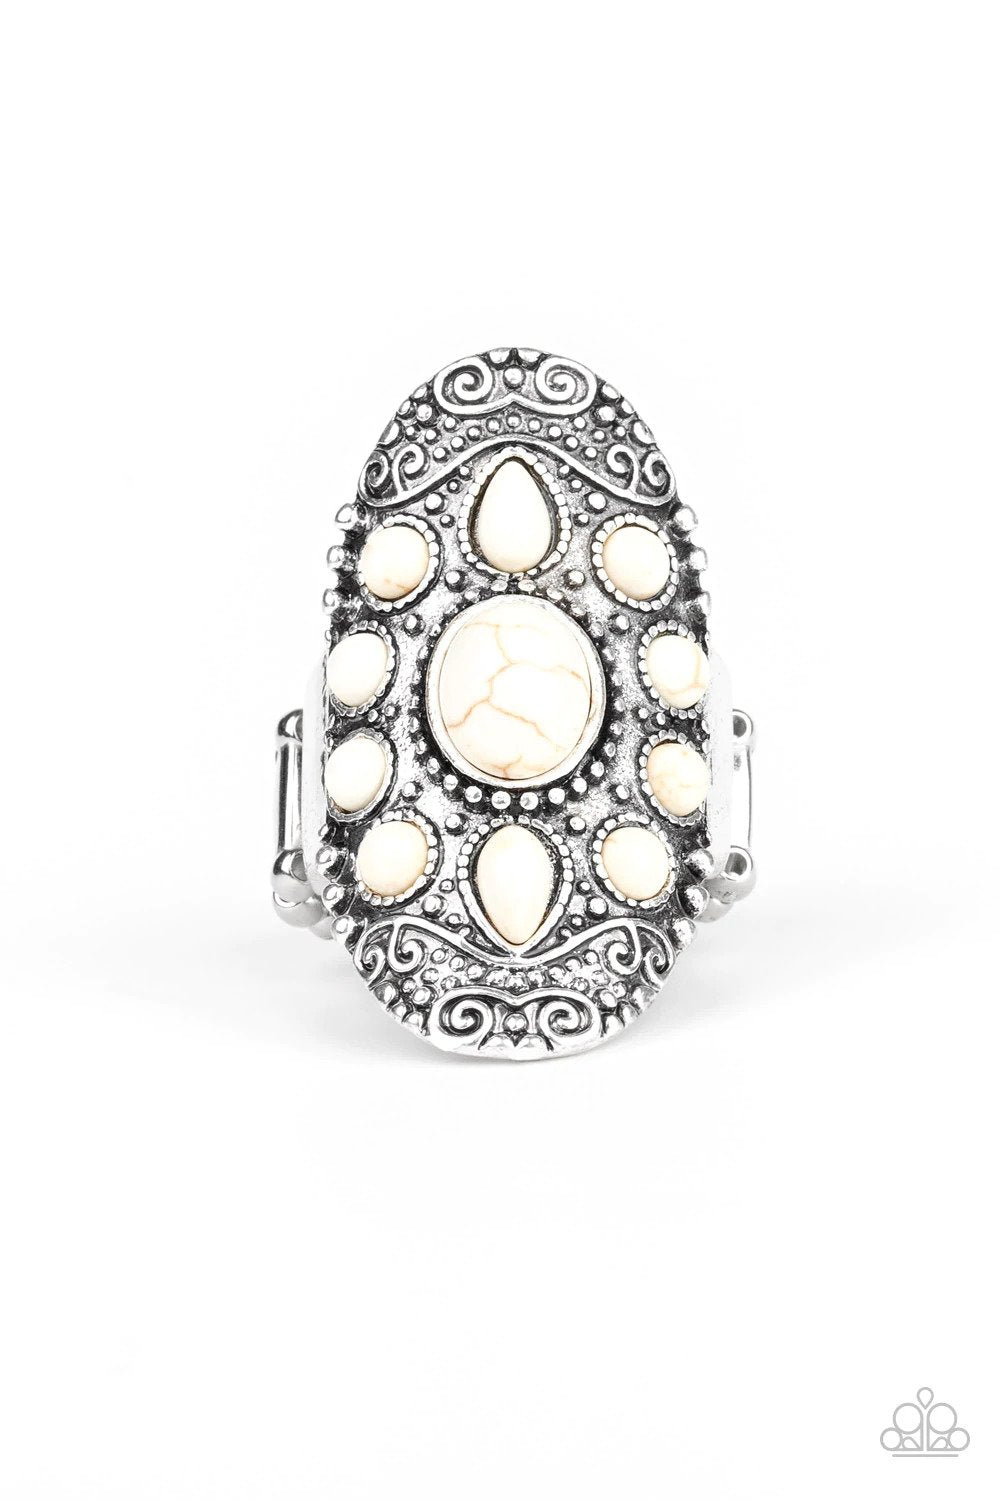 Stone Sunrise White Ring - Paparazzi Accessories- lightbox - CarasShop.com - $5 Jewelry by Cara Jewels